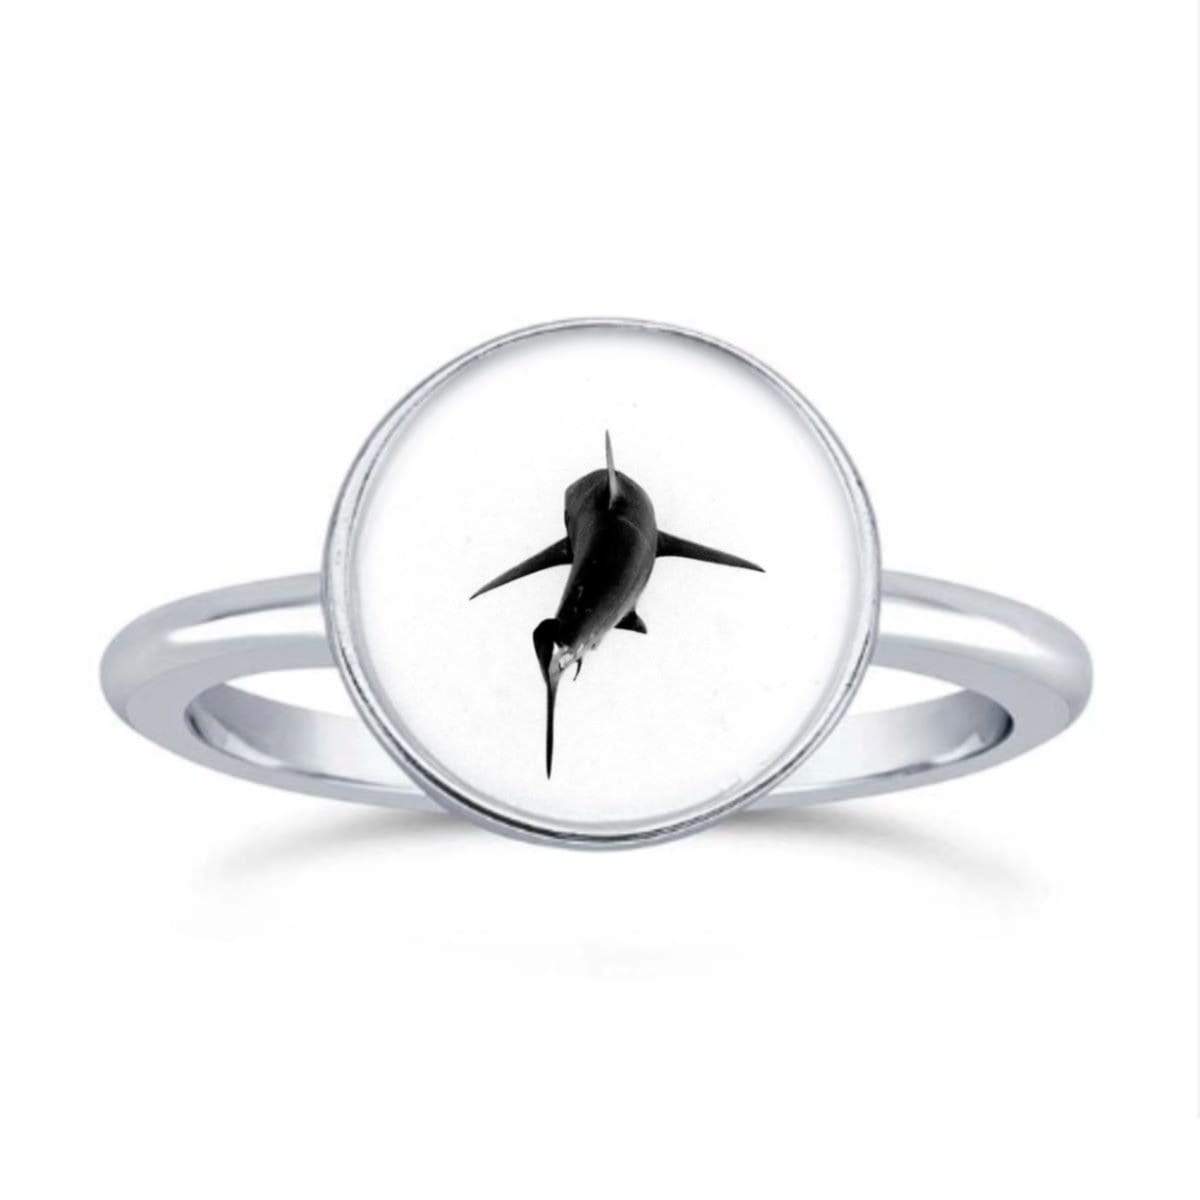 Shark Ring by John Baran